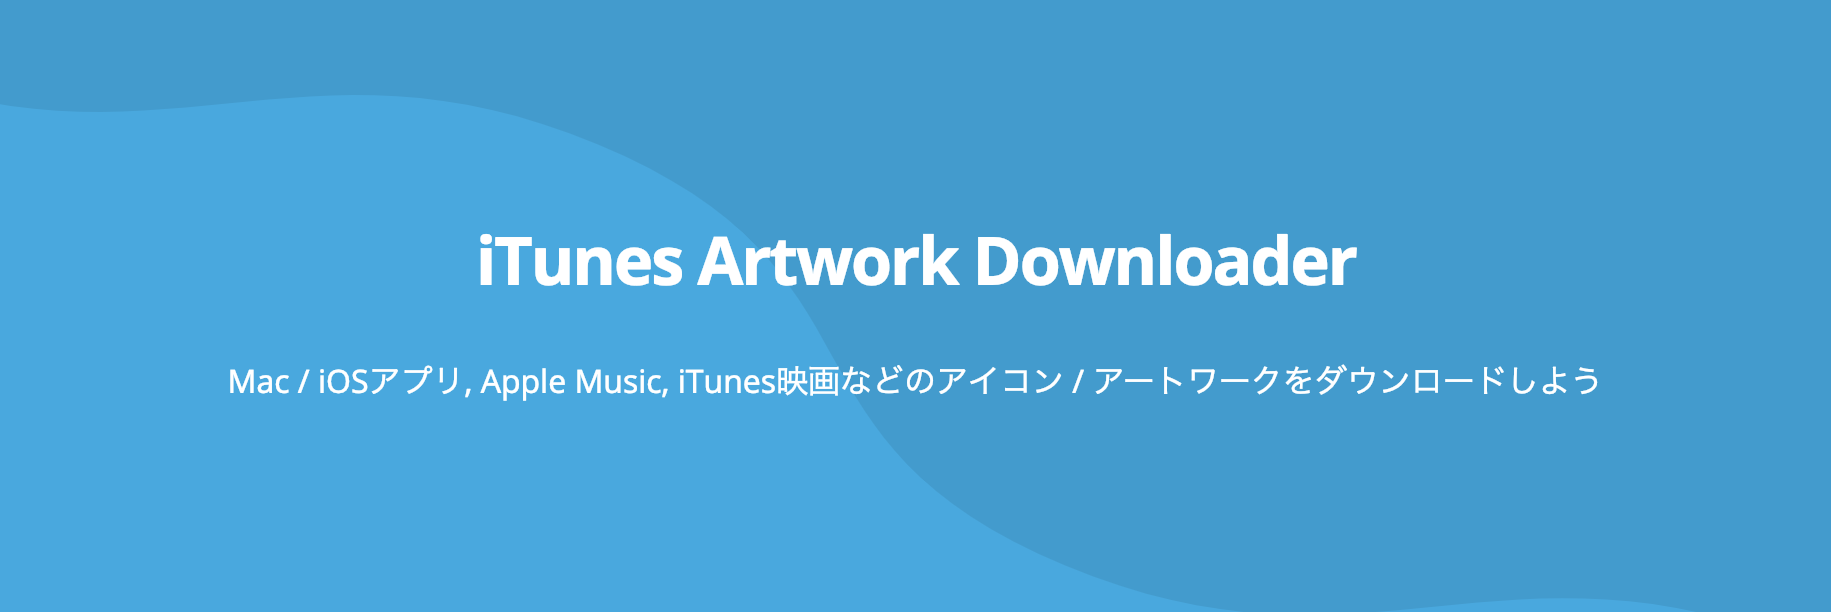 MacアプリやiPhoneアプリのアイコンをダウンロードできる「iTunes Artwork Downloader」